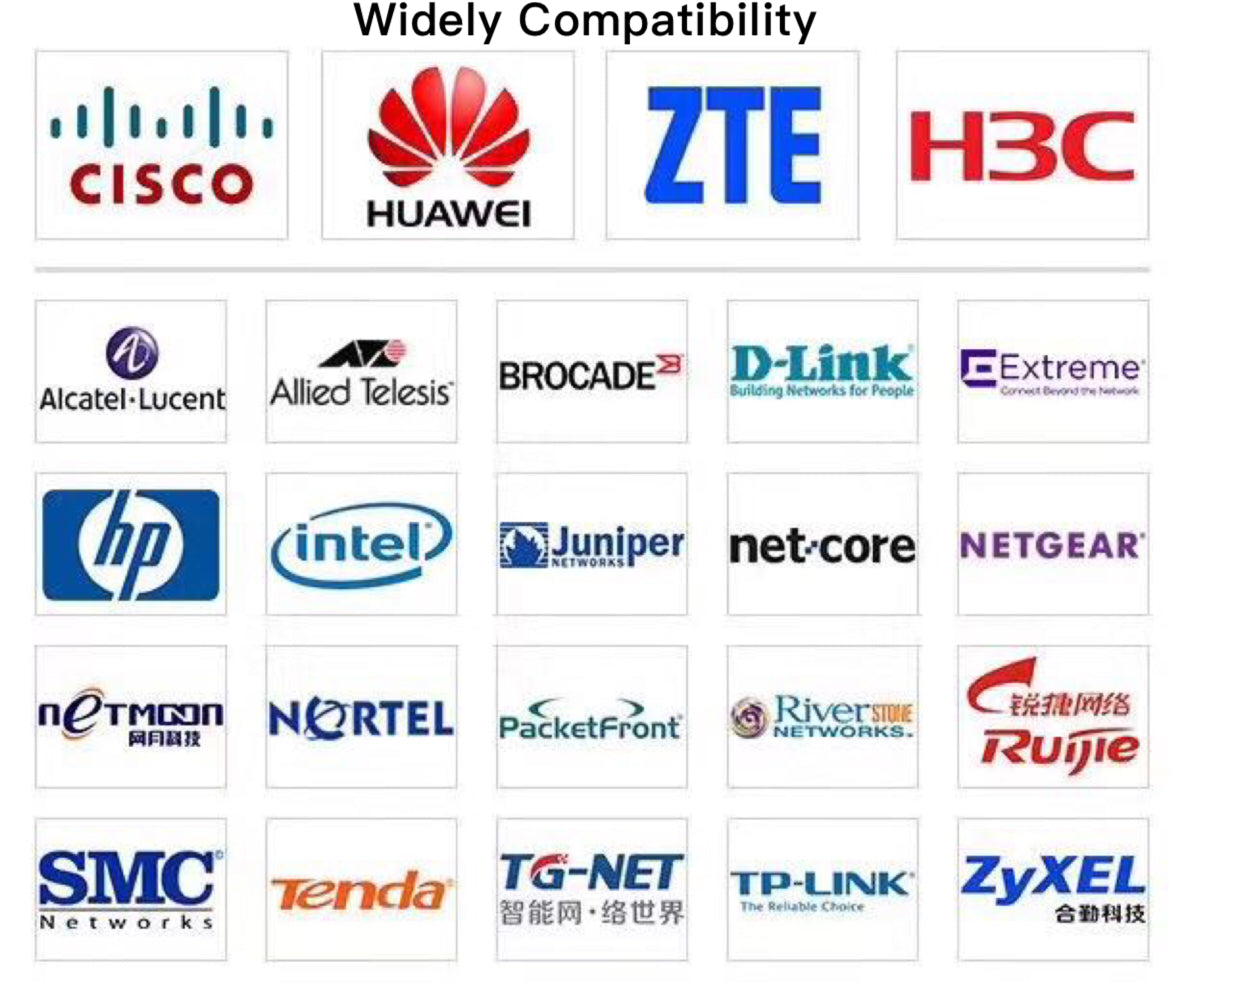 SFP+10G SM1310 Dual fiber 10KM LC Transceiver Module Compatible with Huawei Cisco etc Switch